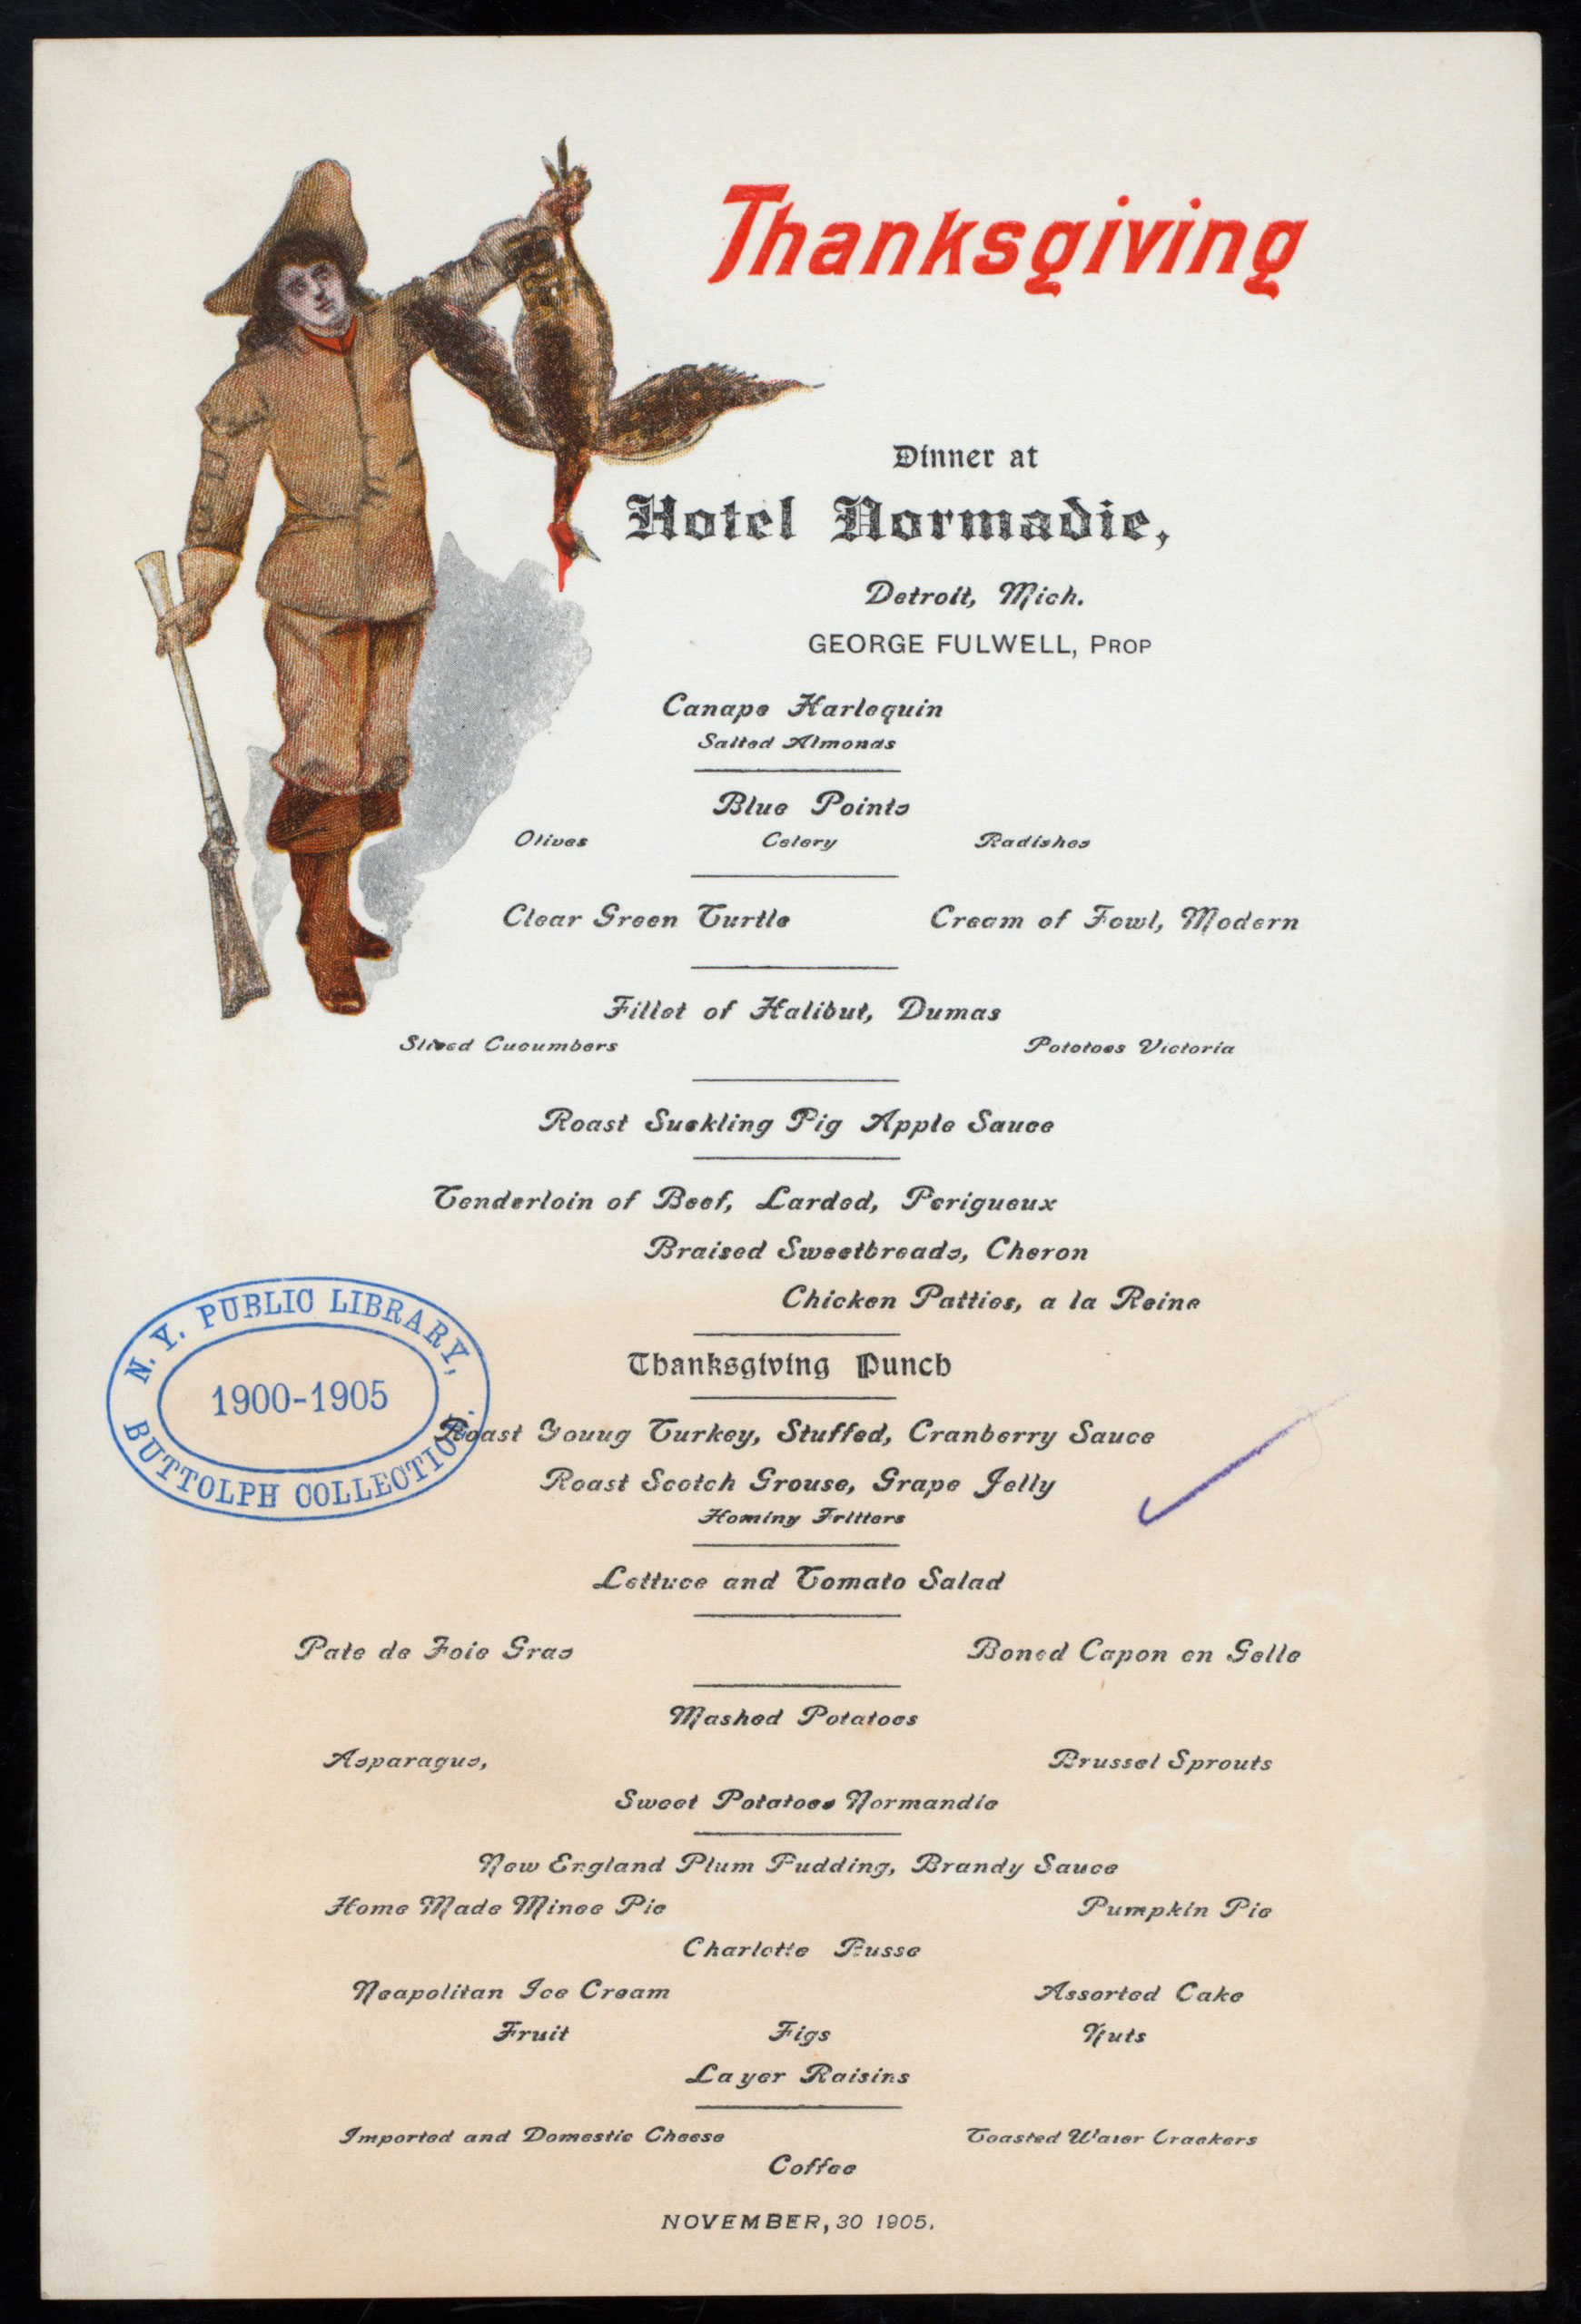 Thanksgiving Dinner menu from the Hotel Normandie, Detroit, MI, 1905.